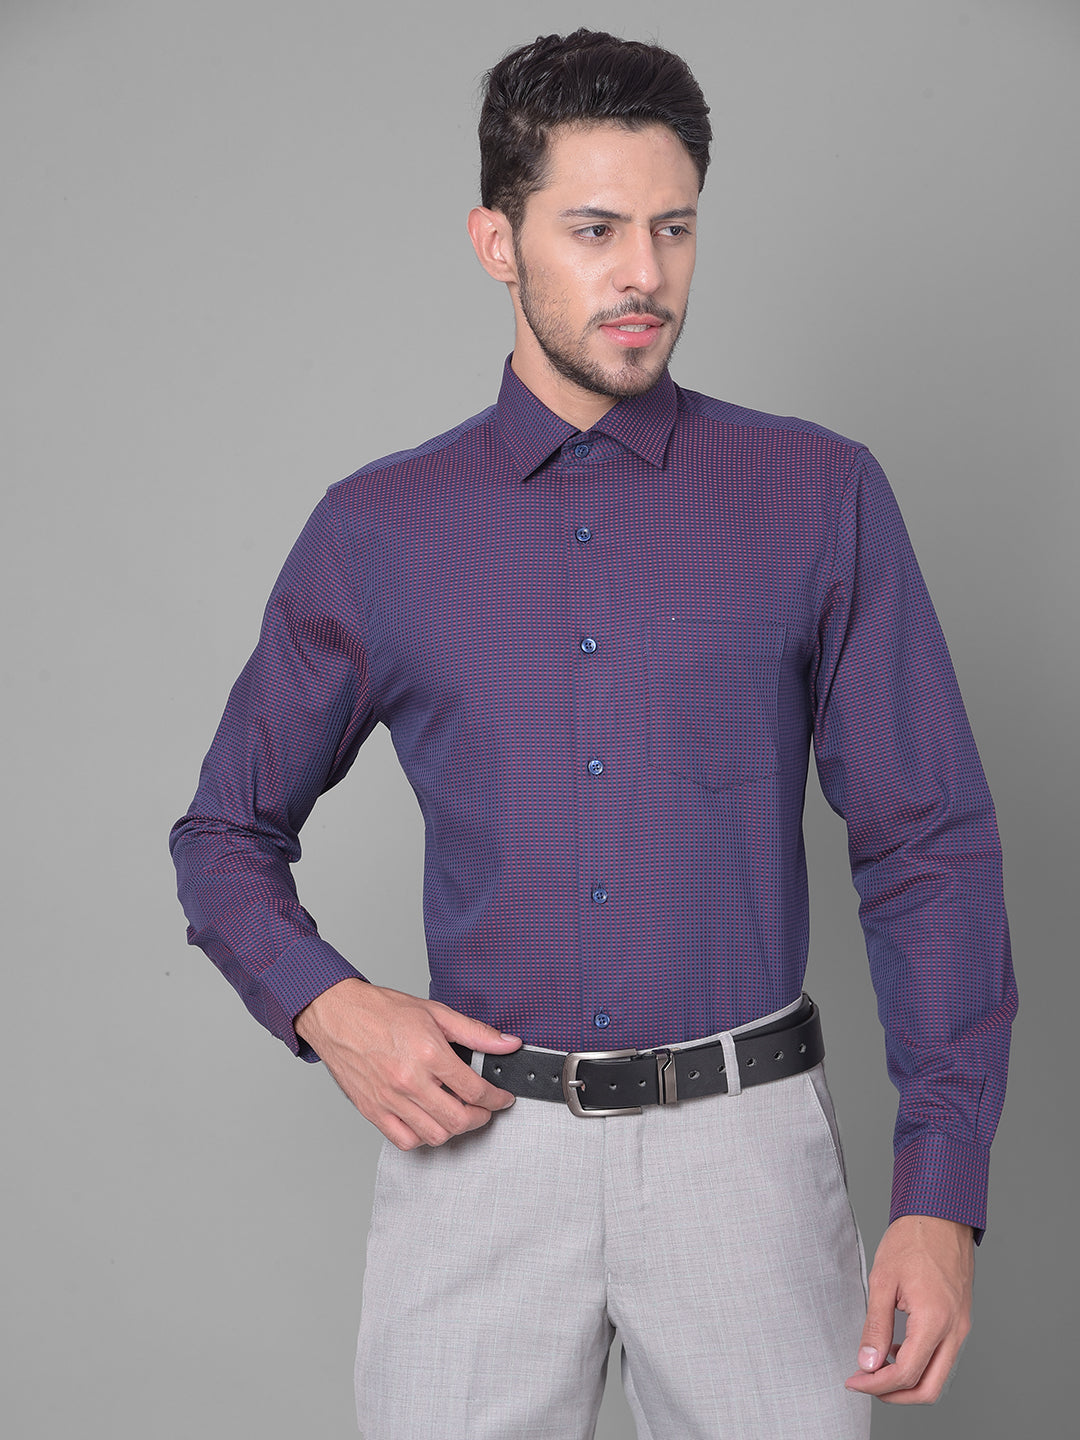 Cobb Purple Solid Slim Fit Formal Shirt Purple